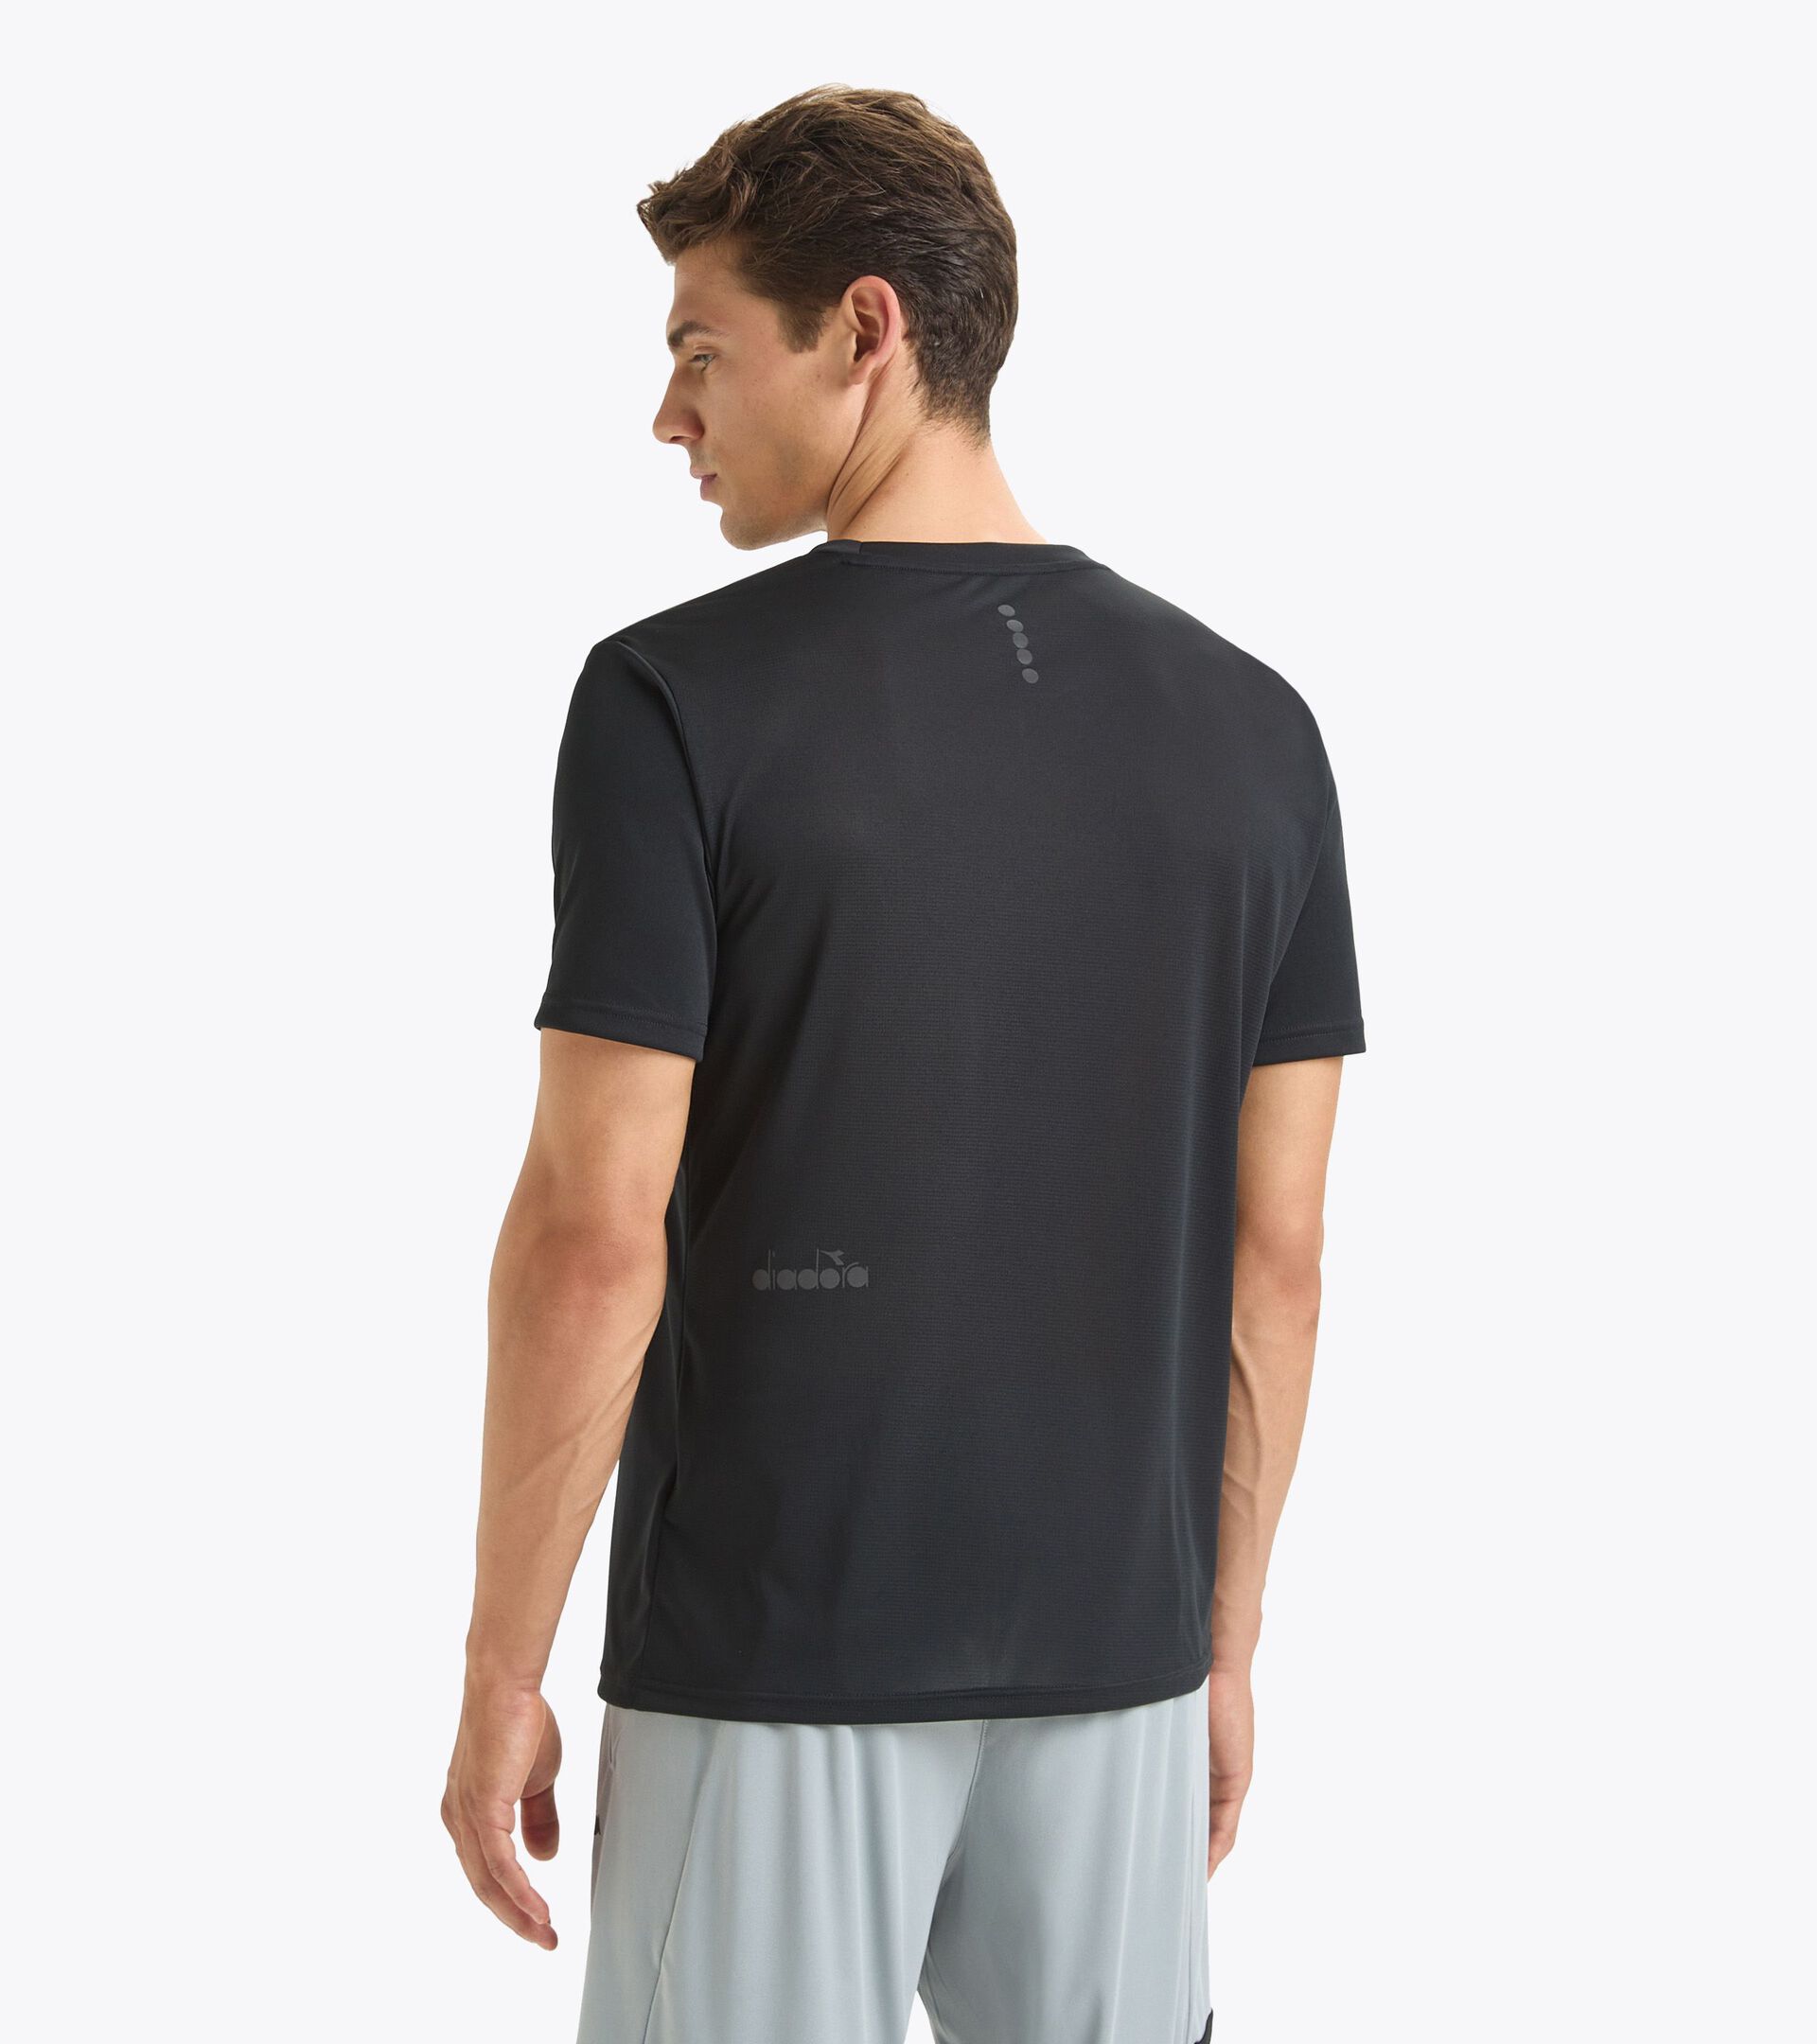 Camiseta deportiva - Hombre SS T-SHIRT RUN NEGRO - Diadora